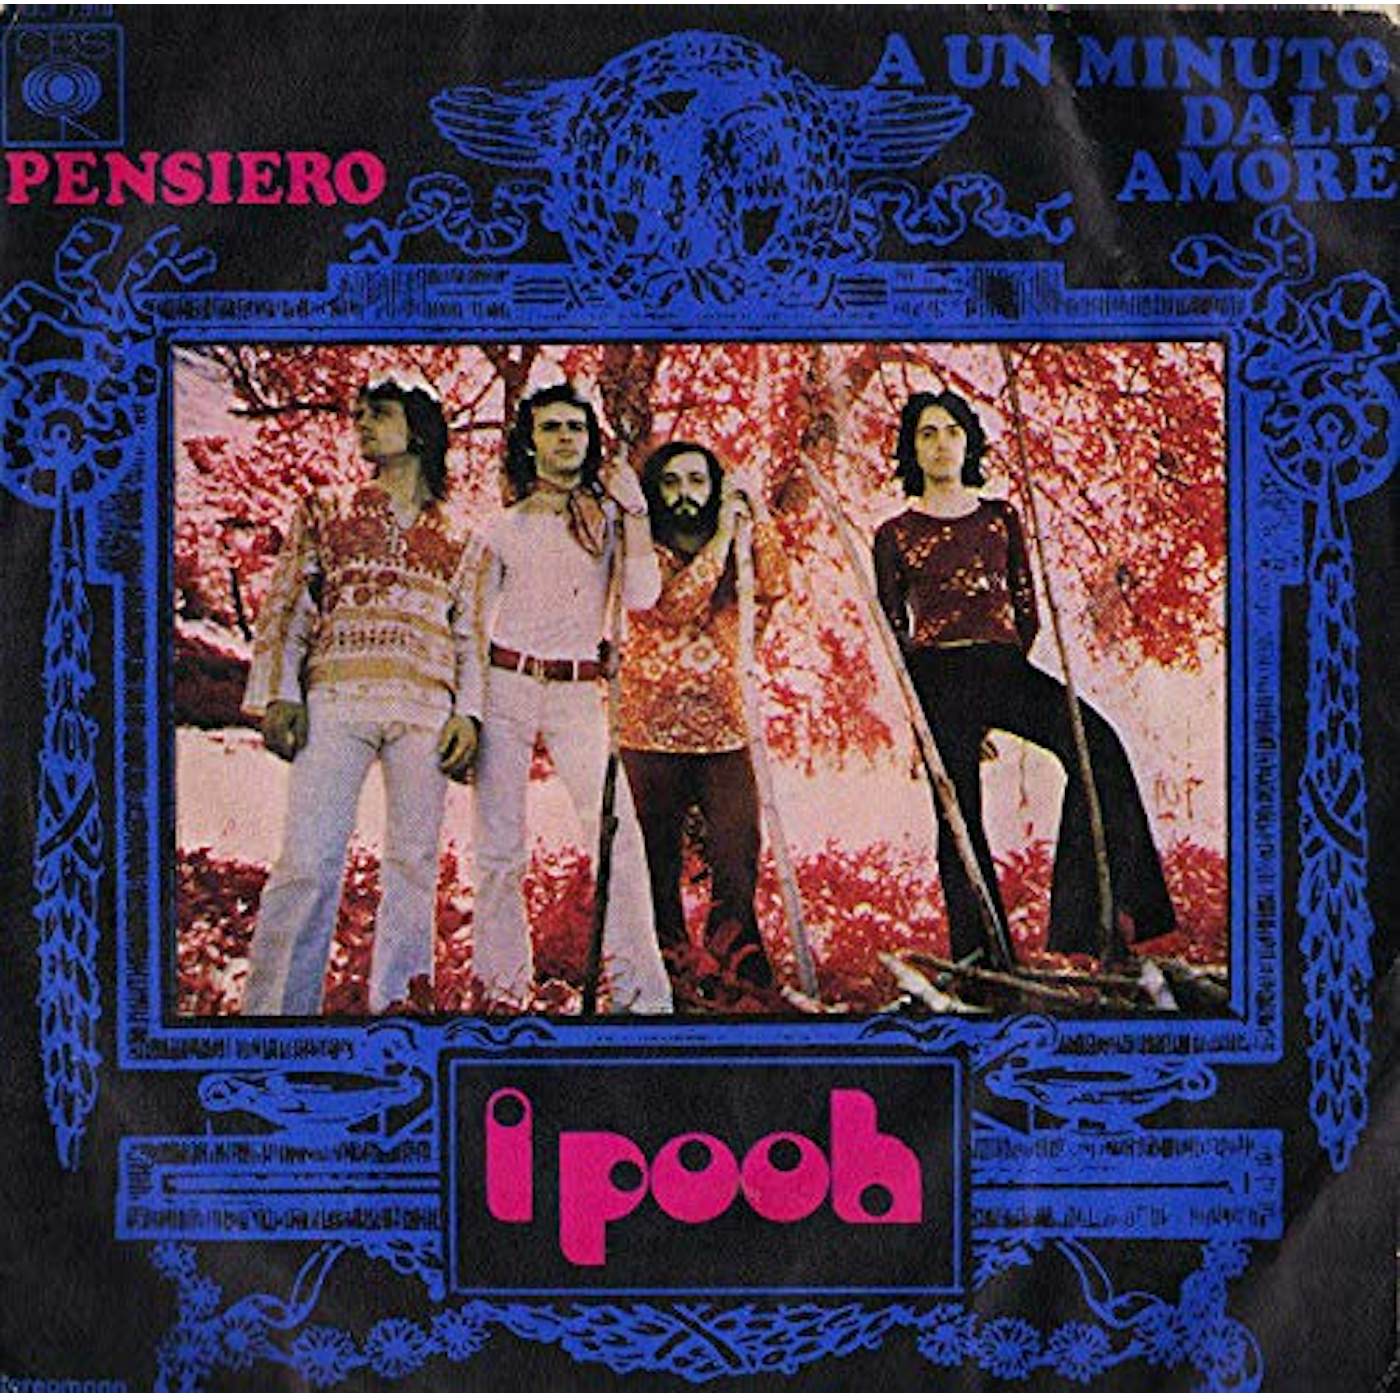 Pooh Pensiero / A Un Minuto Dall'Amore Vinyl Record